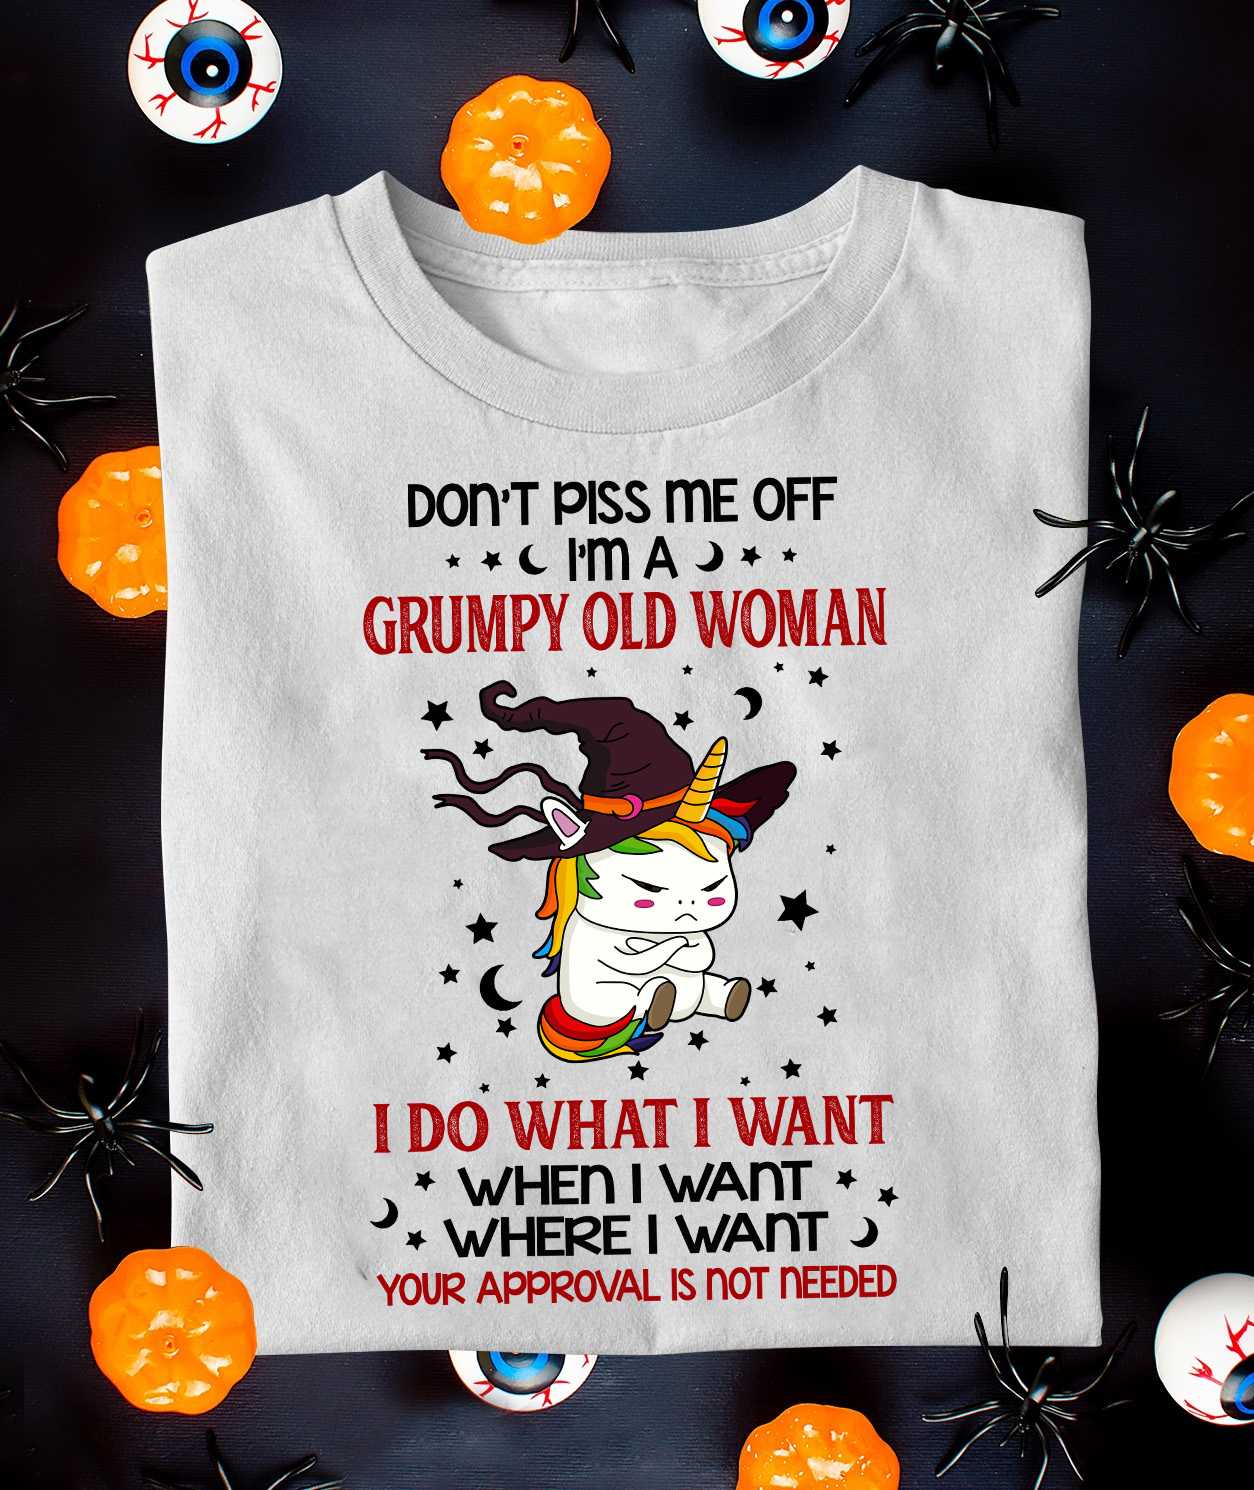 Don't piss me off I'm a grumpy old woman - Grumpy unicorn, Halloween witch costume